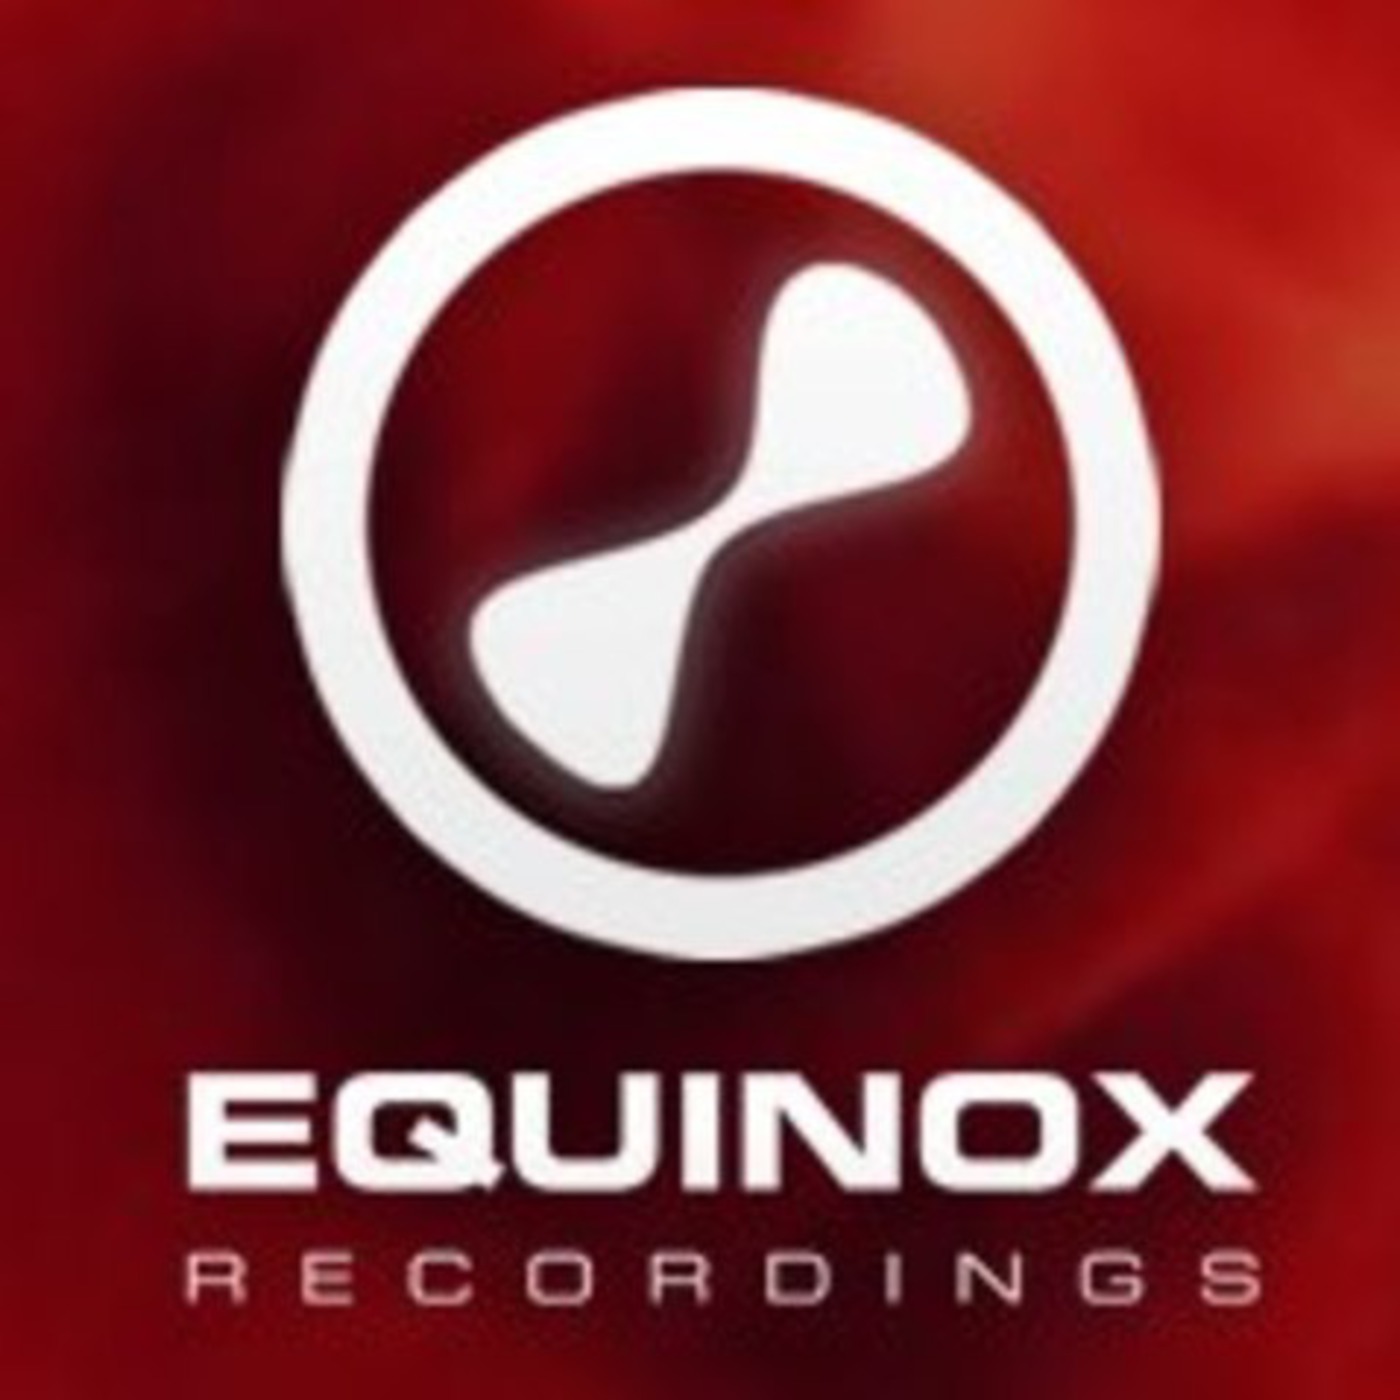 Equinox Recordings' Podcast